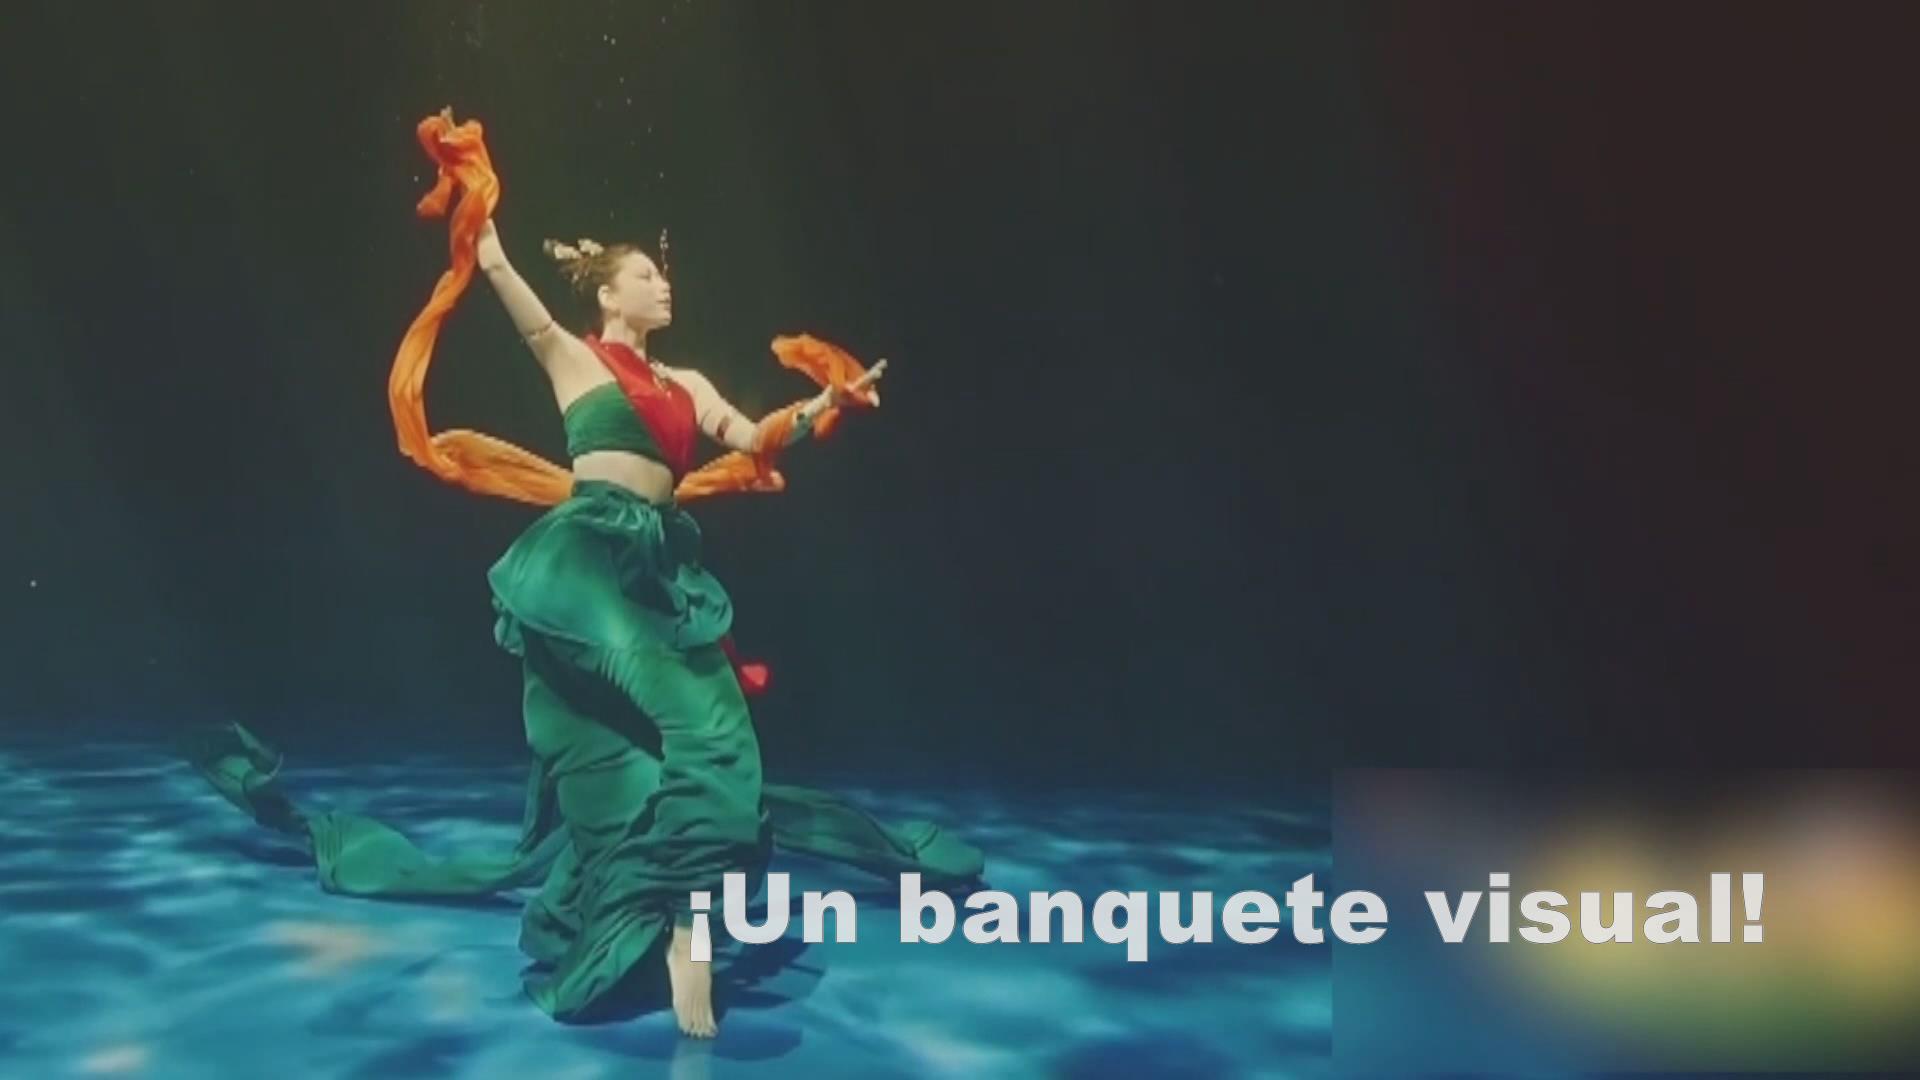 Danza subacuática en Henan, China retrata antigua leyenda